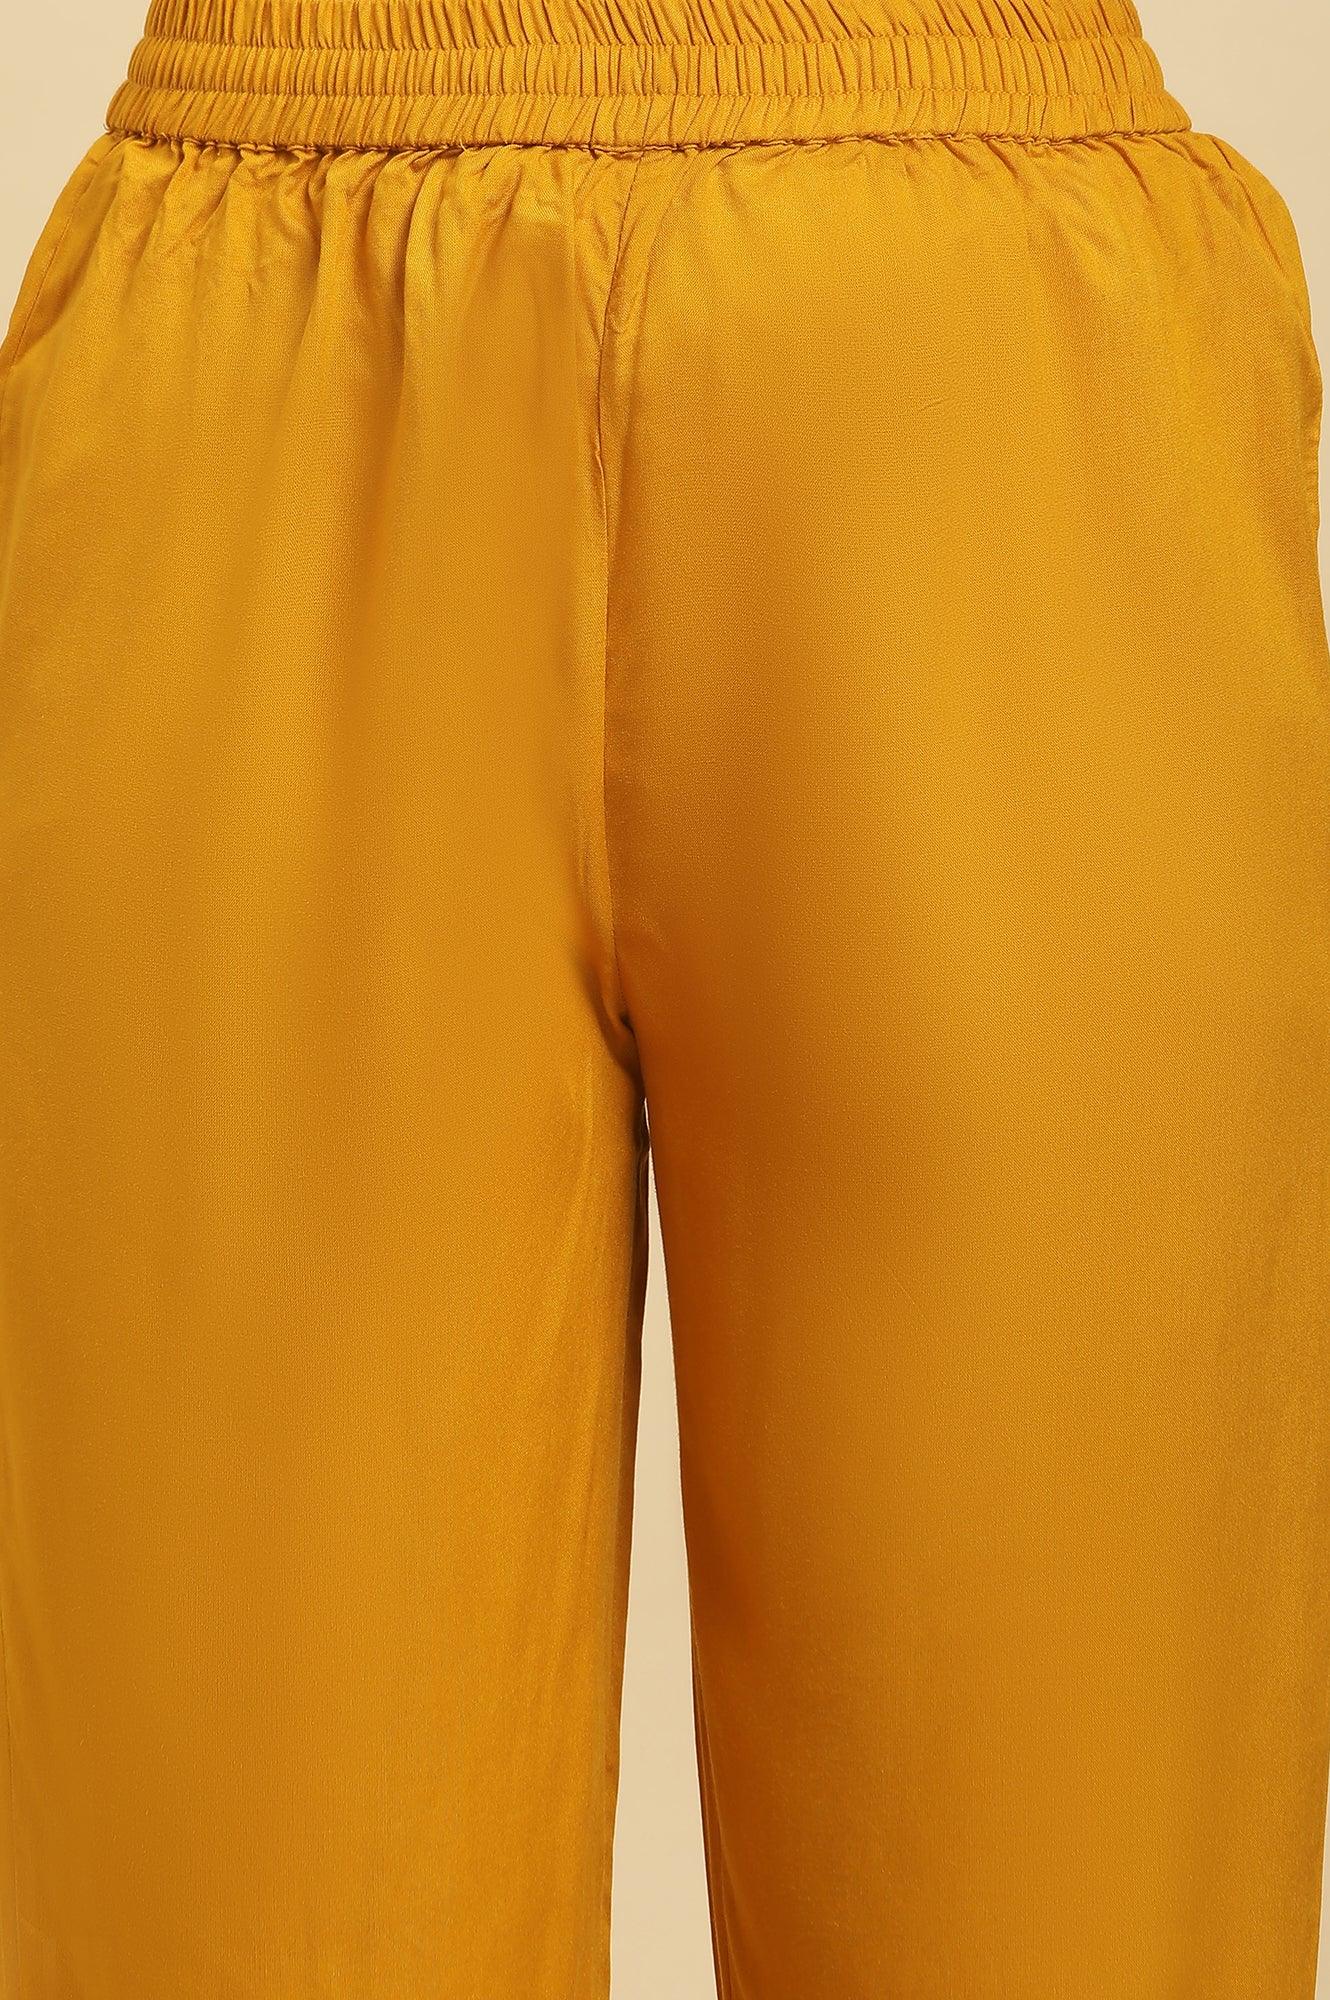 Yellow Embellished Shantung Kurta, Pants And Dupatta Set - wforwoman